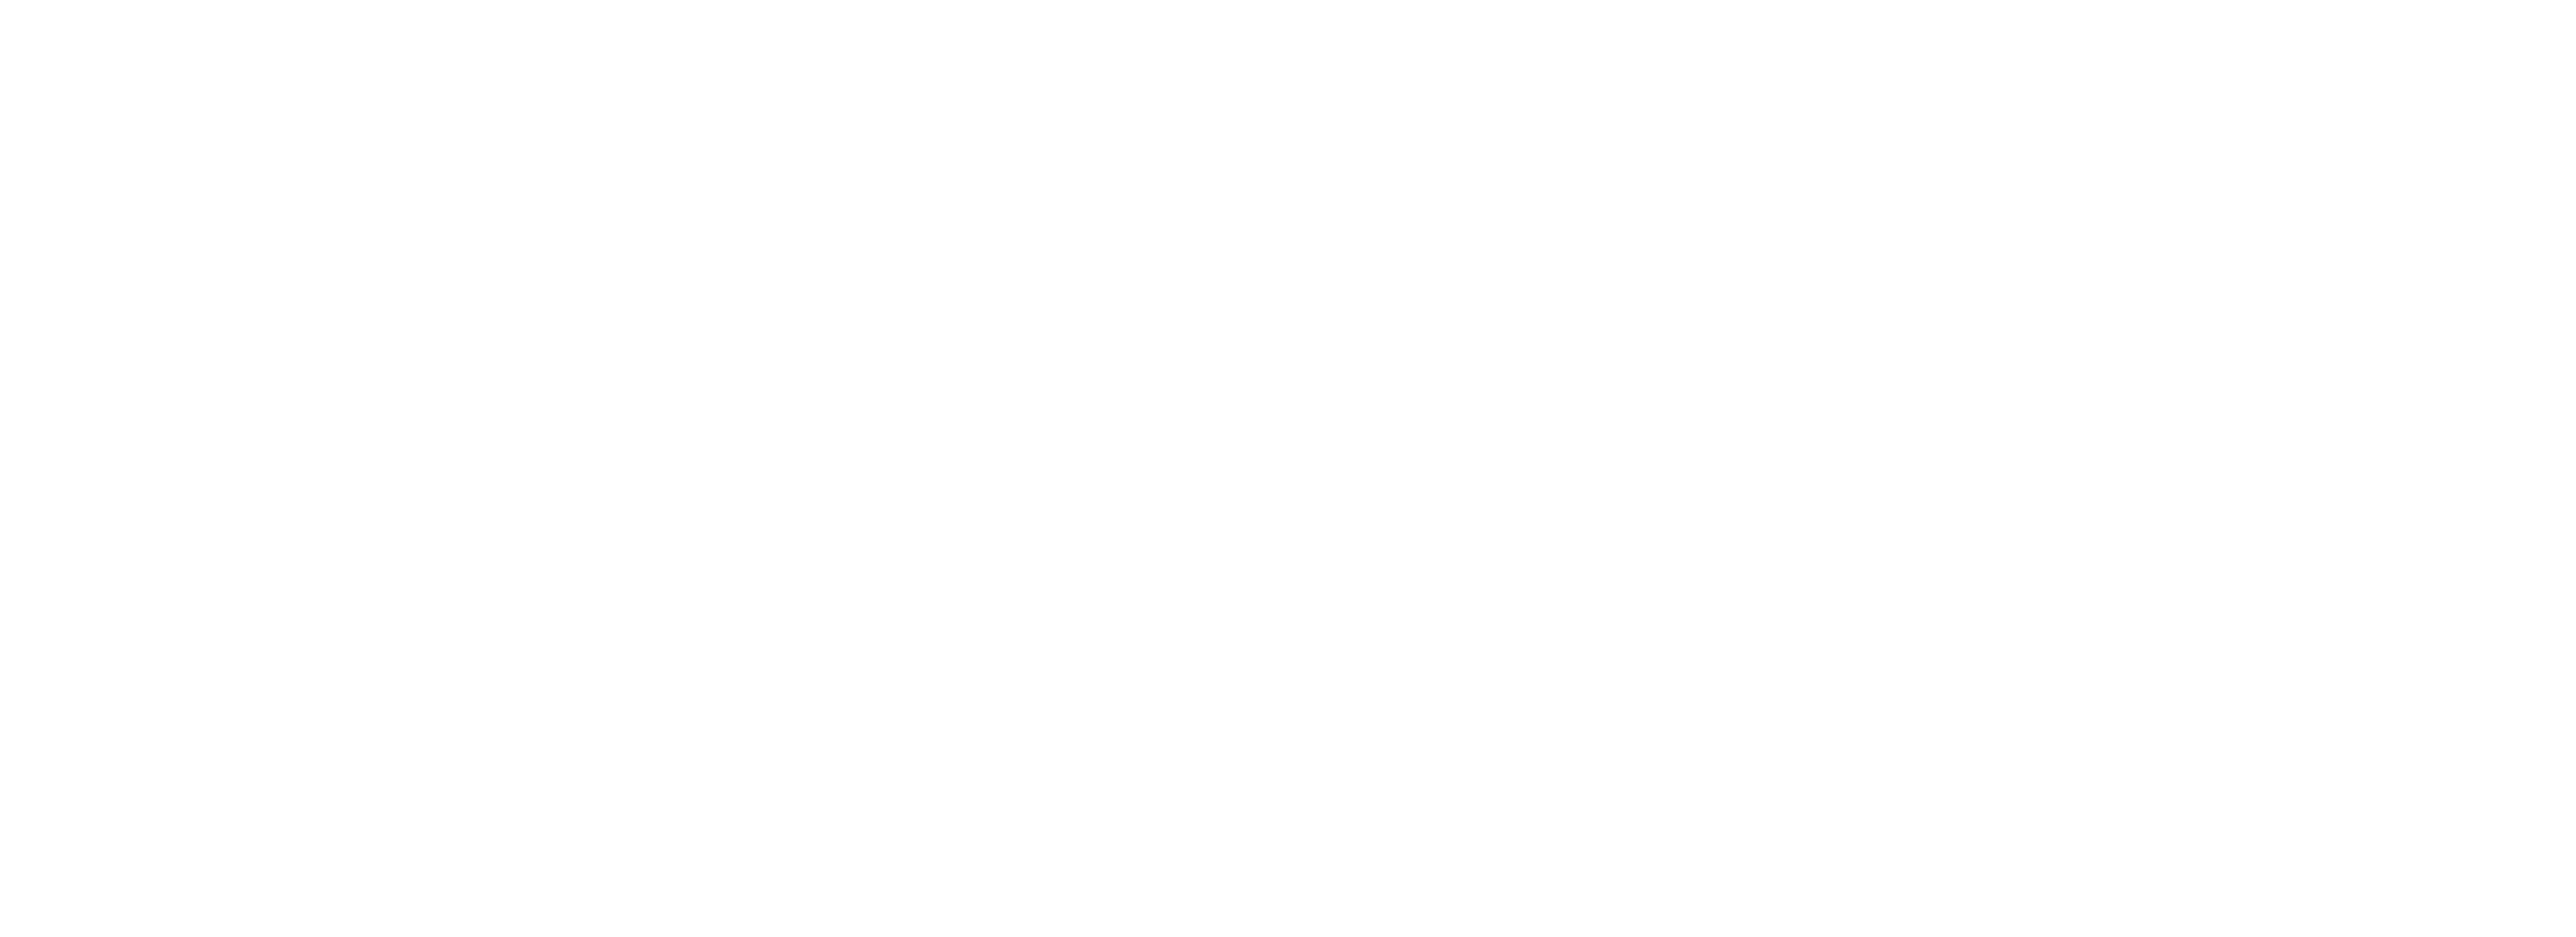 United MMA